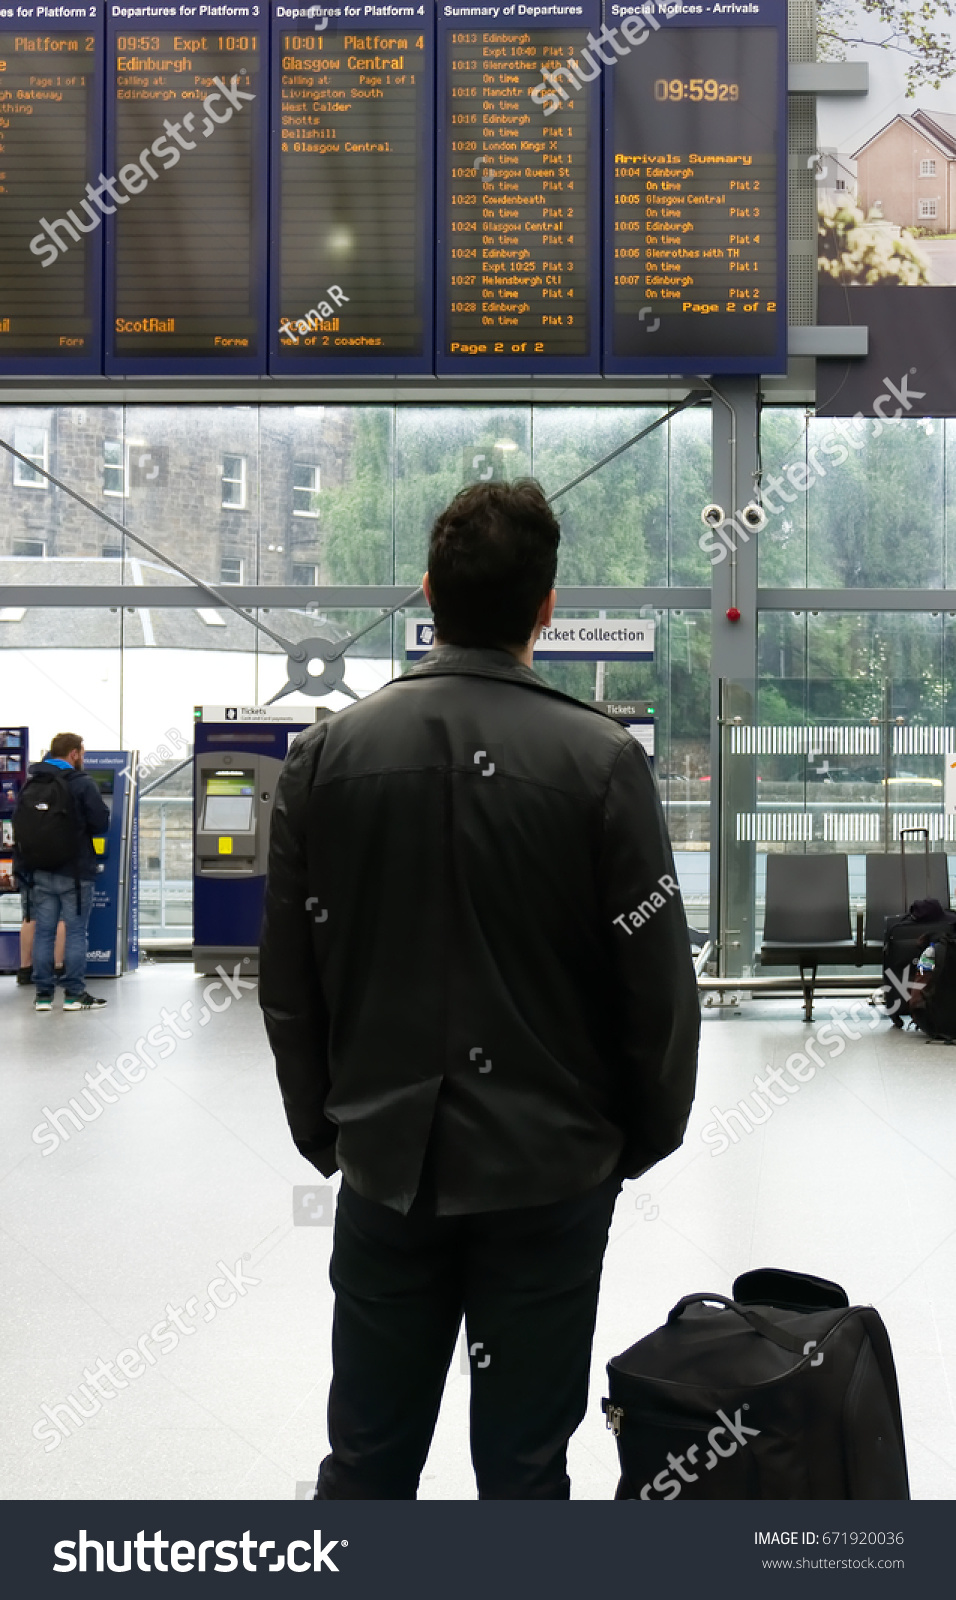 EDINBURGH, SCOTLAND - JUNE 20, 2017 : Haymarket Train Station interior showing departure board, unidentified traveller looking at departure board in foreground. #671920036